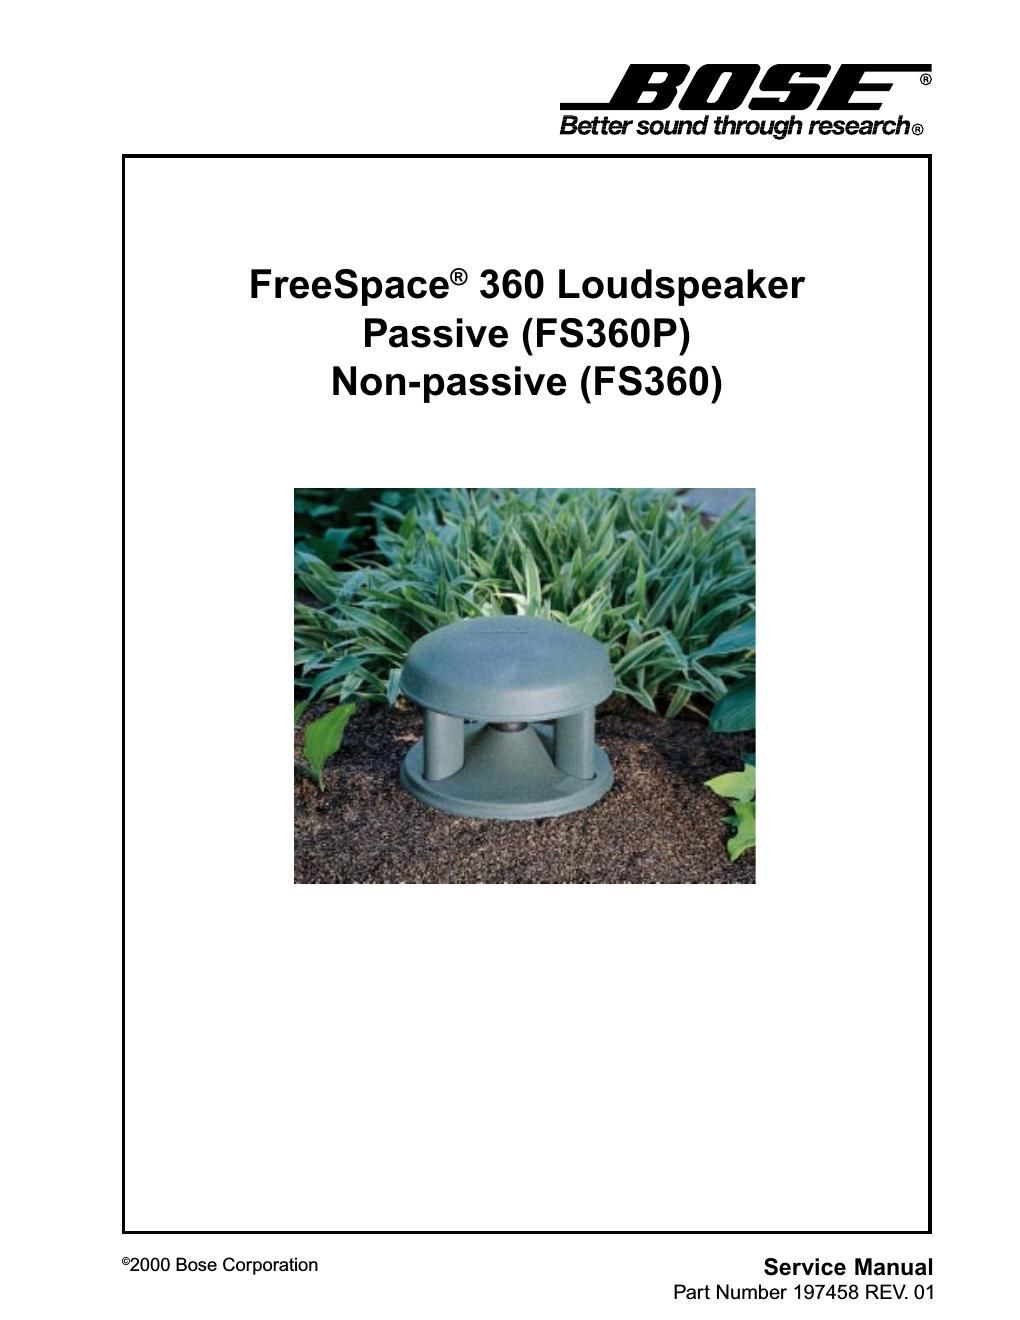 bose freespace 360 loudspeaker